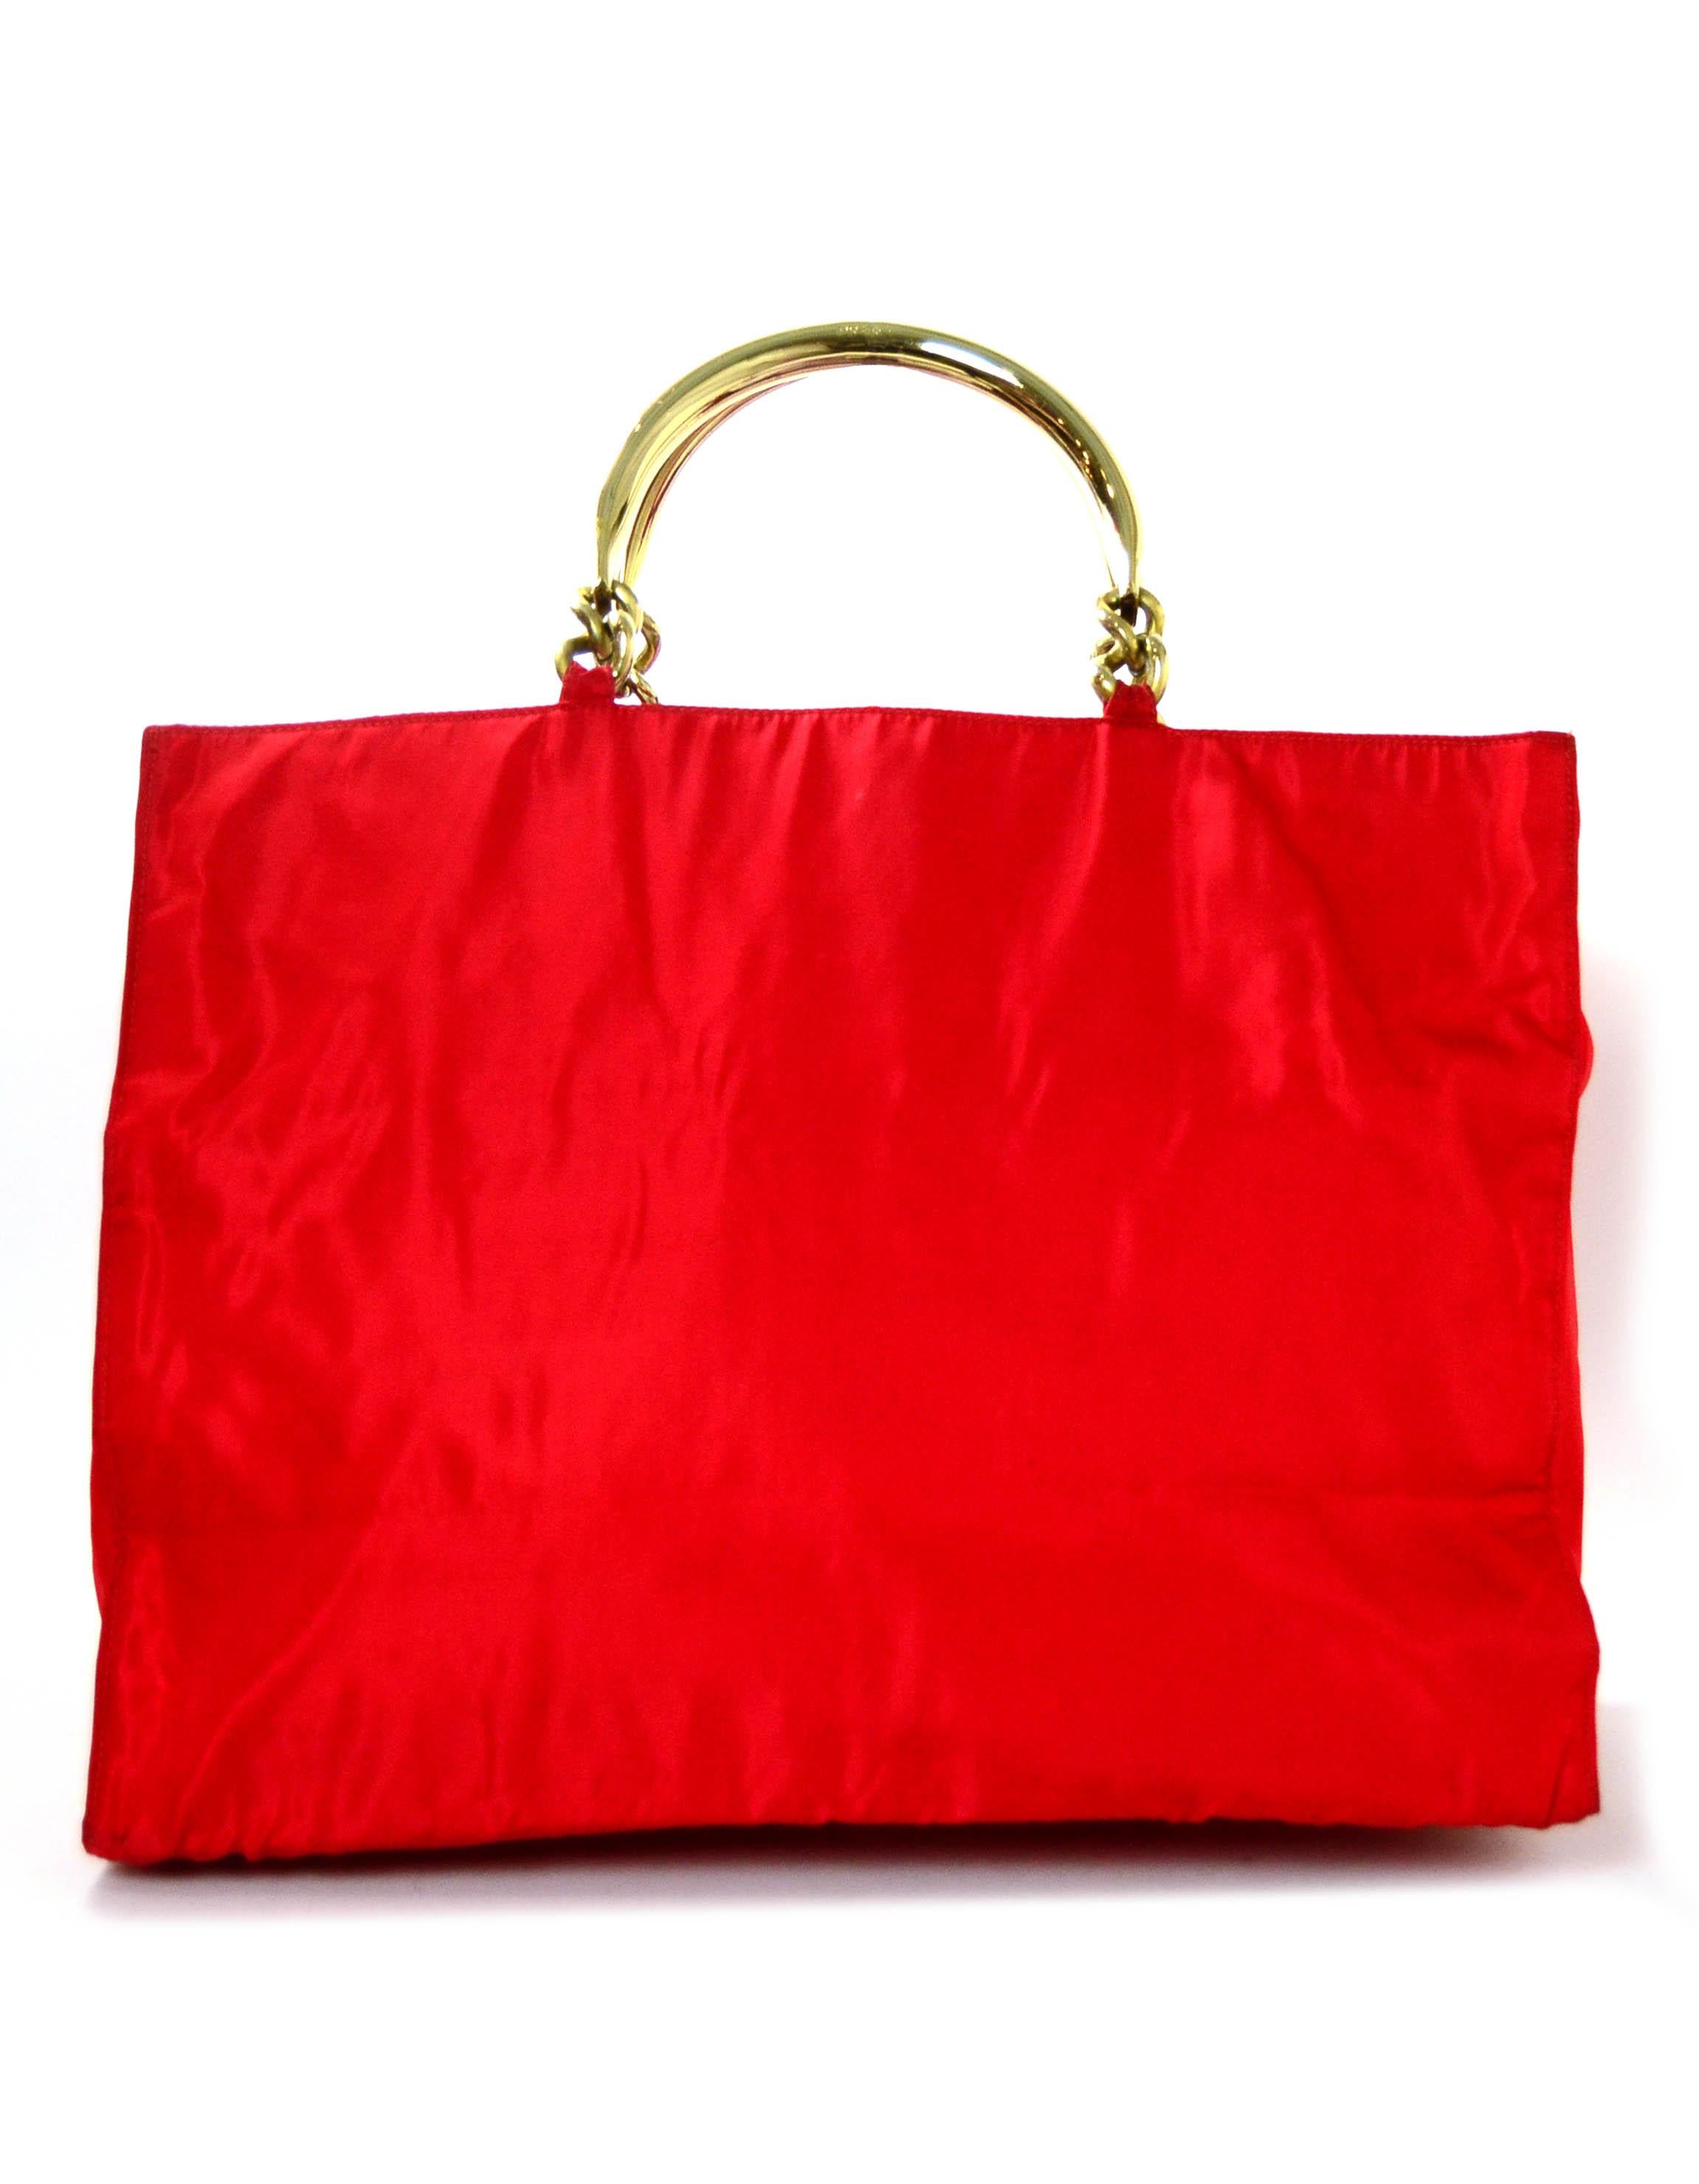 tote bag with metal handles